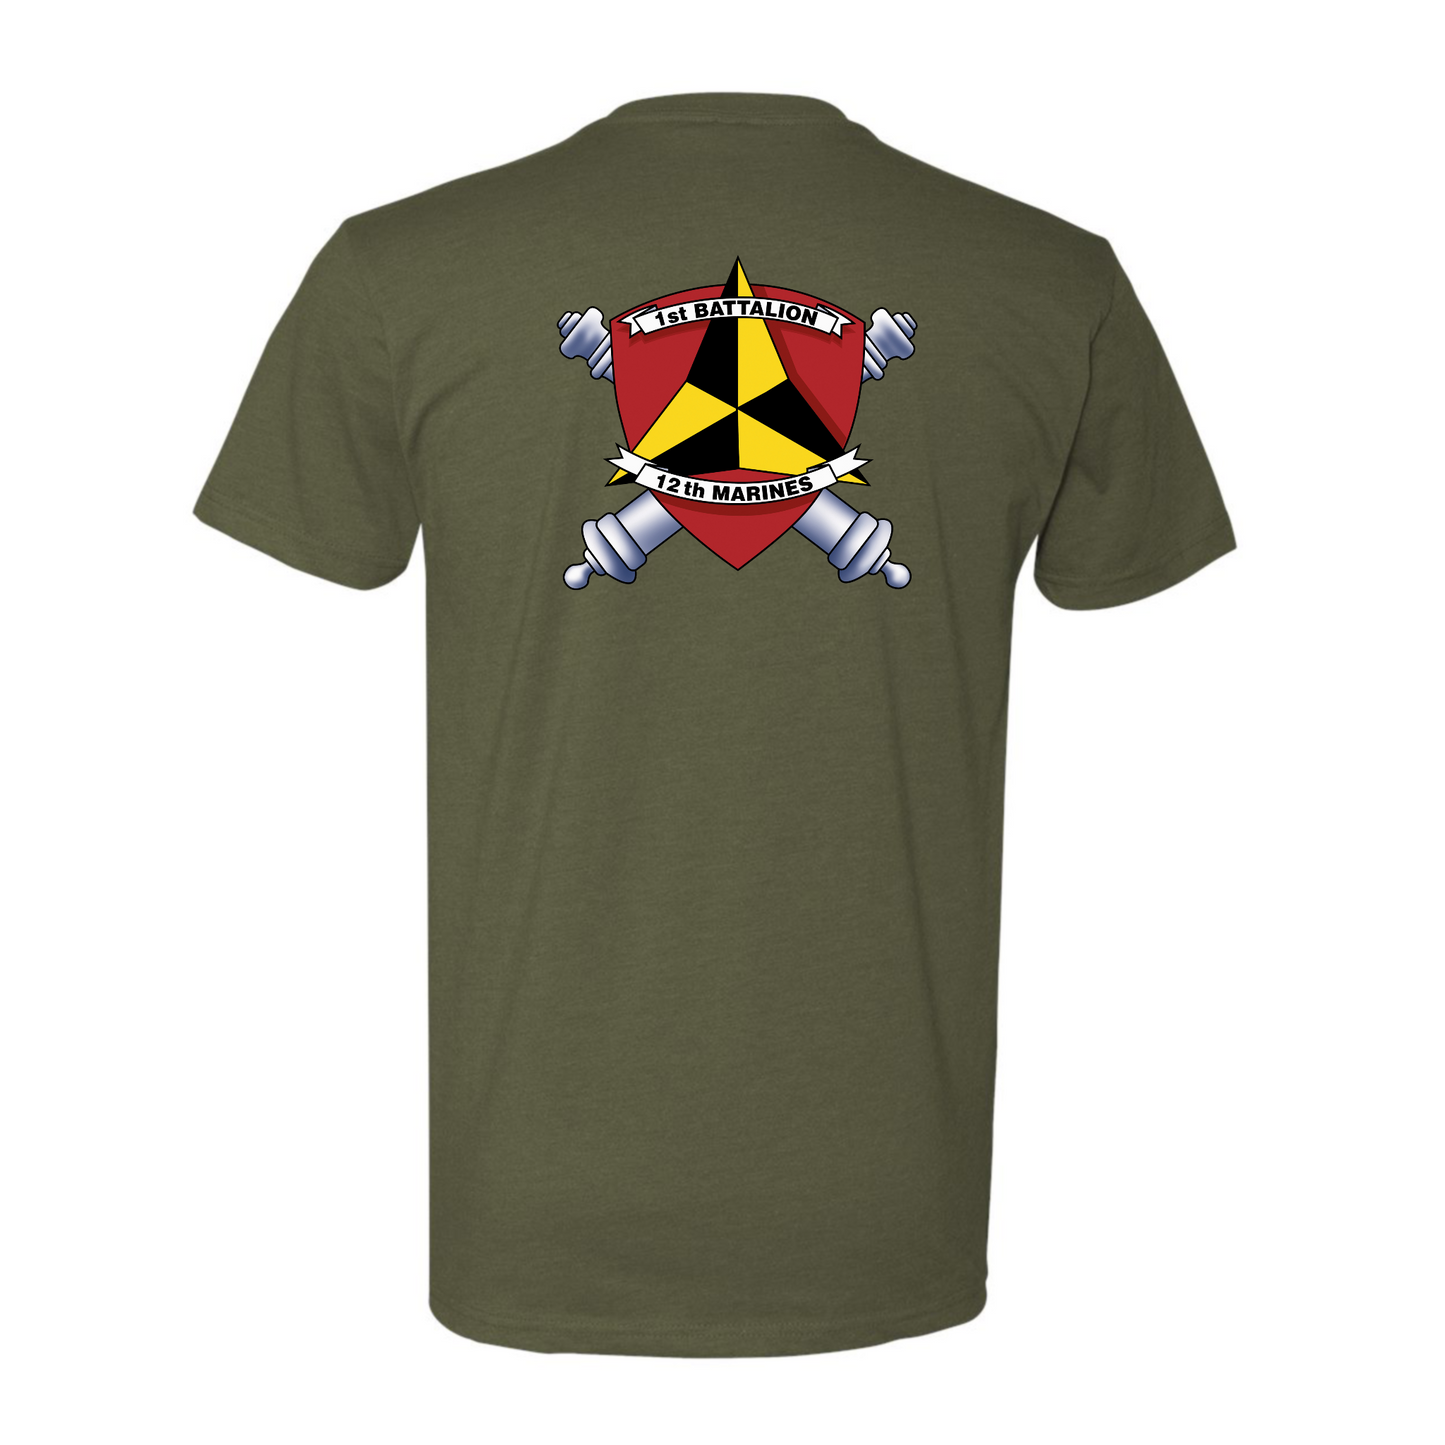 1st Battalion 12th Marines Spartans